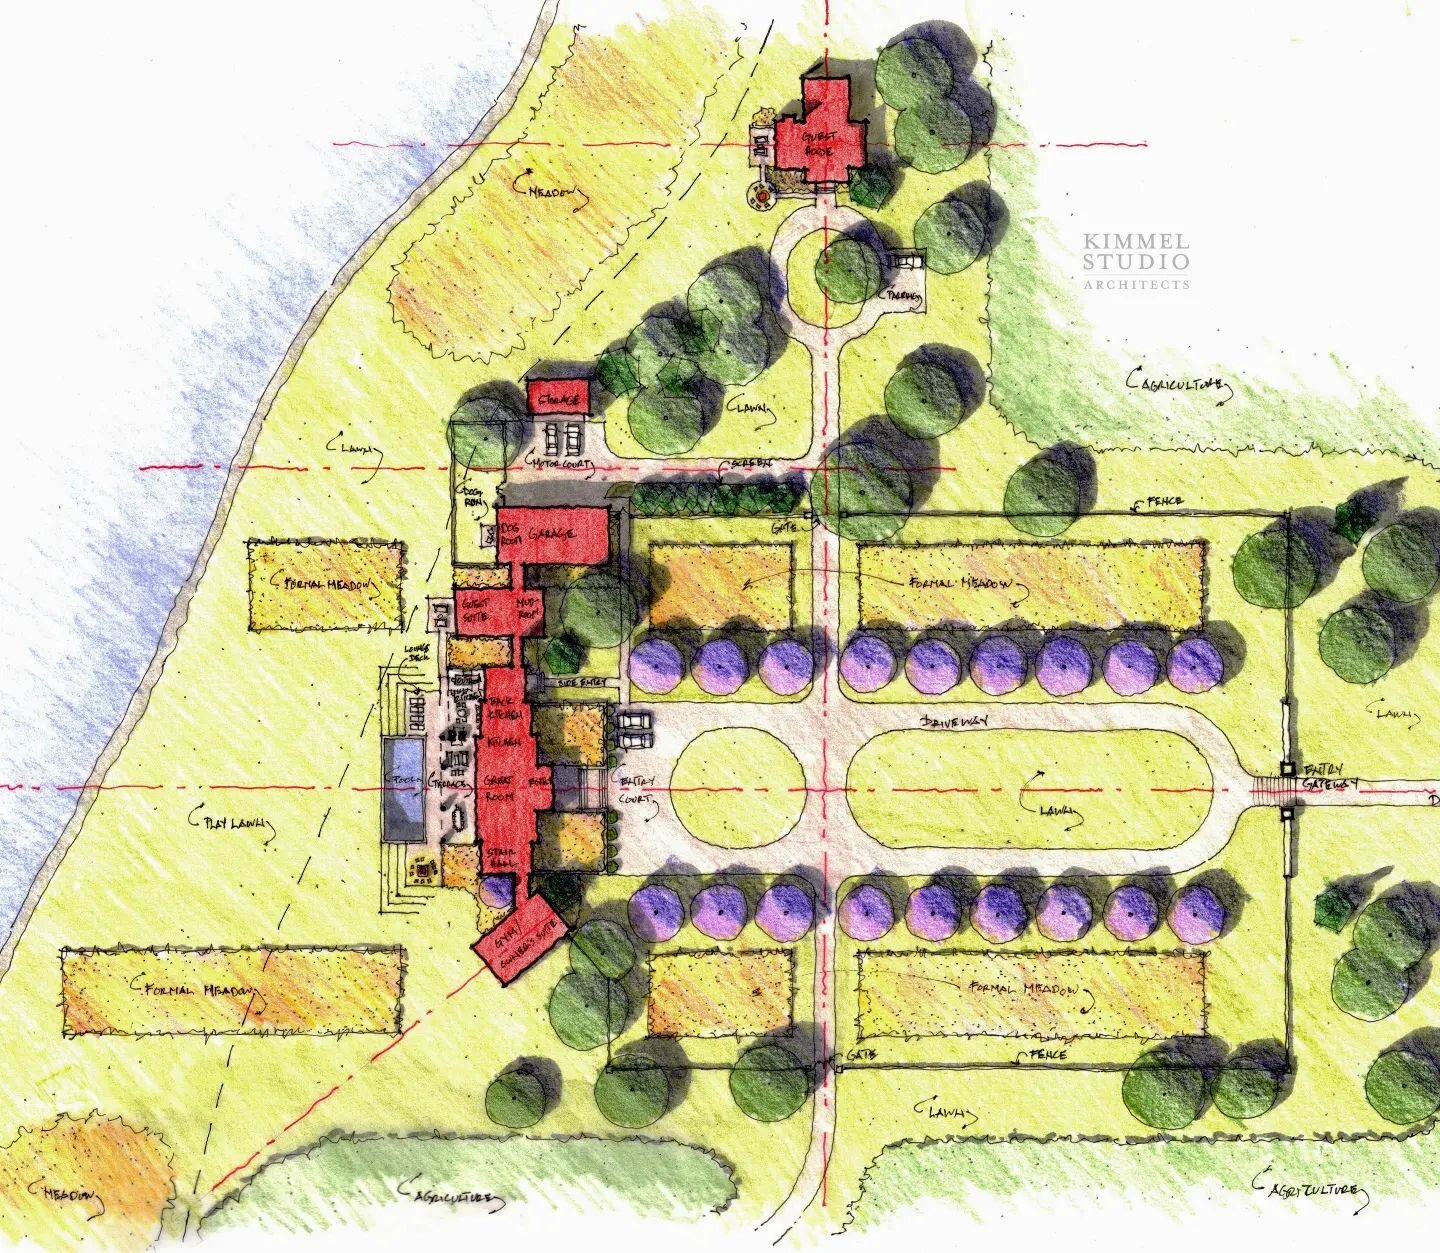 Master plan concept for a new waterfront estate!
#masterplan #landscapedesign #landscapeplan #farm #estate #kimmelstudiolandscape #kimmel #kimmelstidio #kimmelstudioarchitects